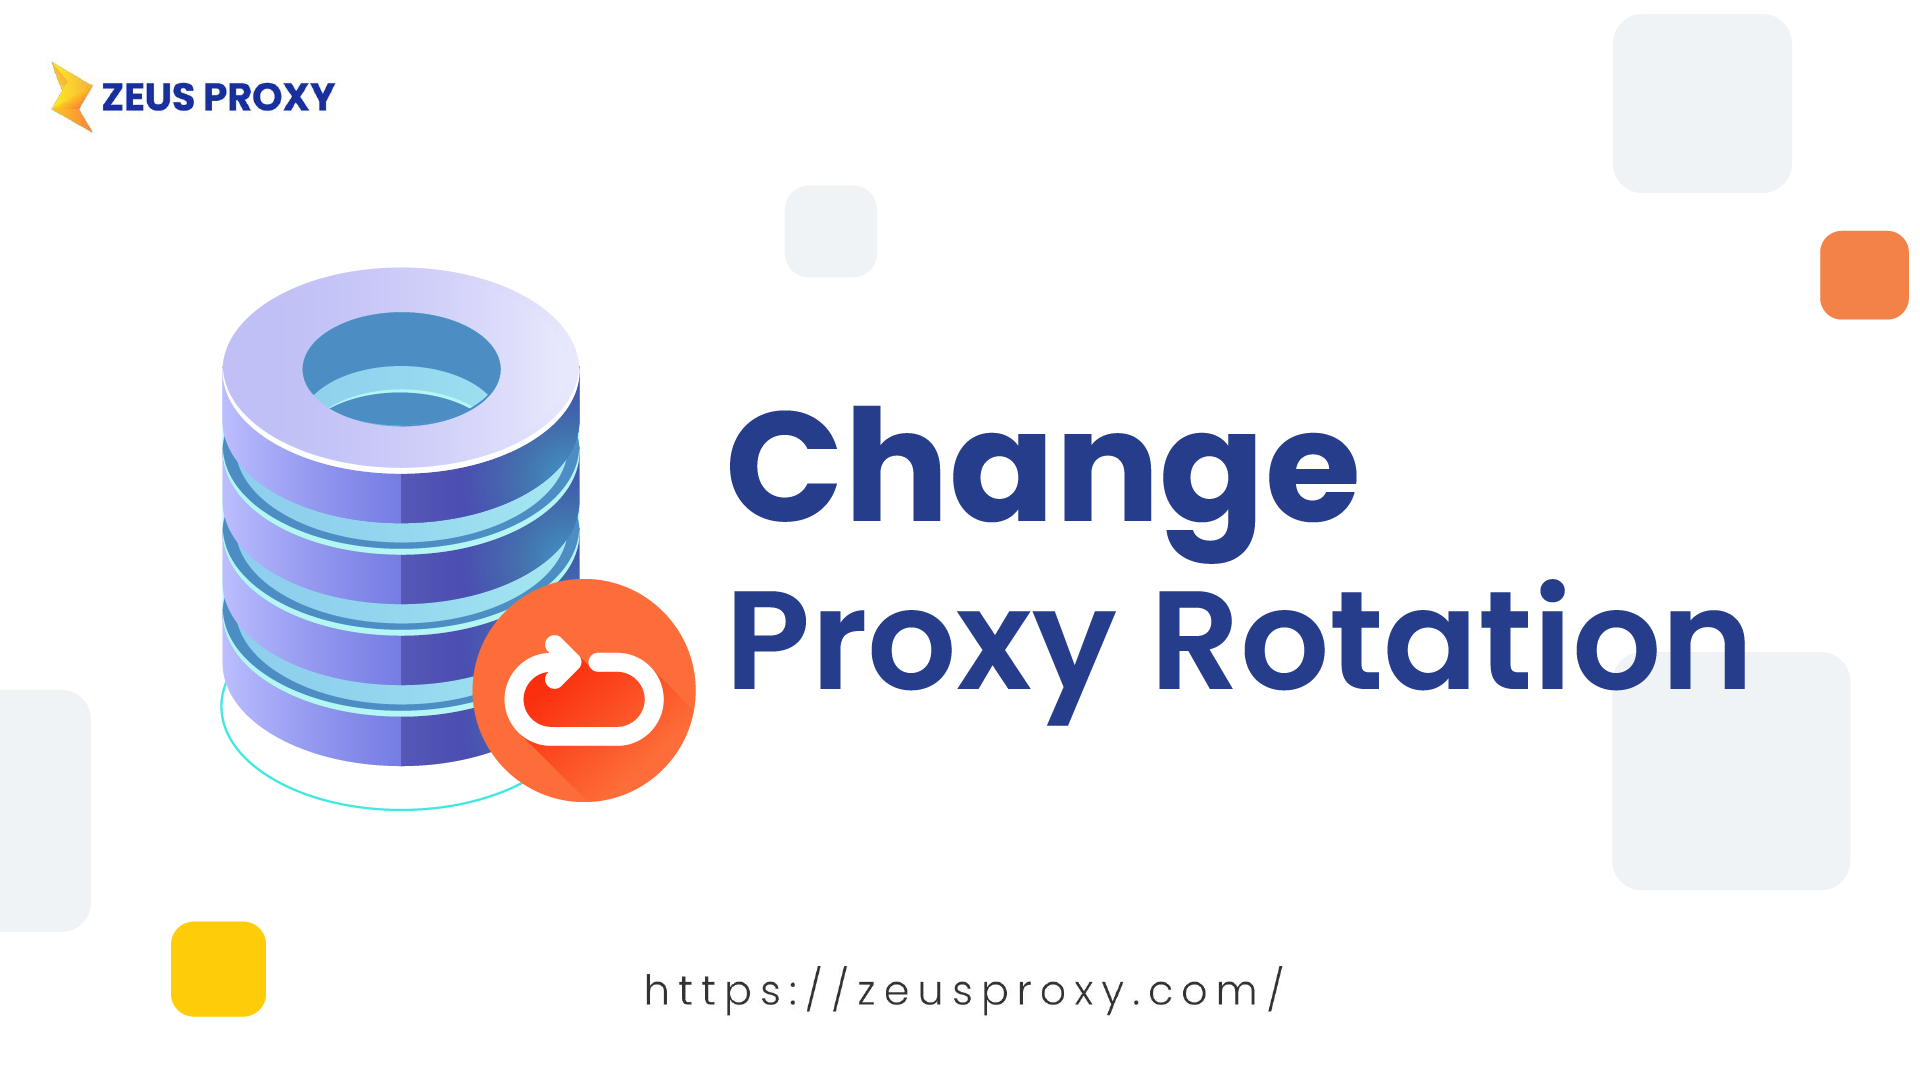 How to change proxy rotation?